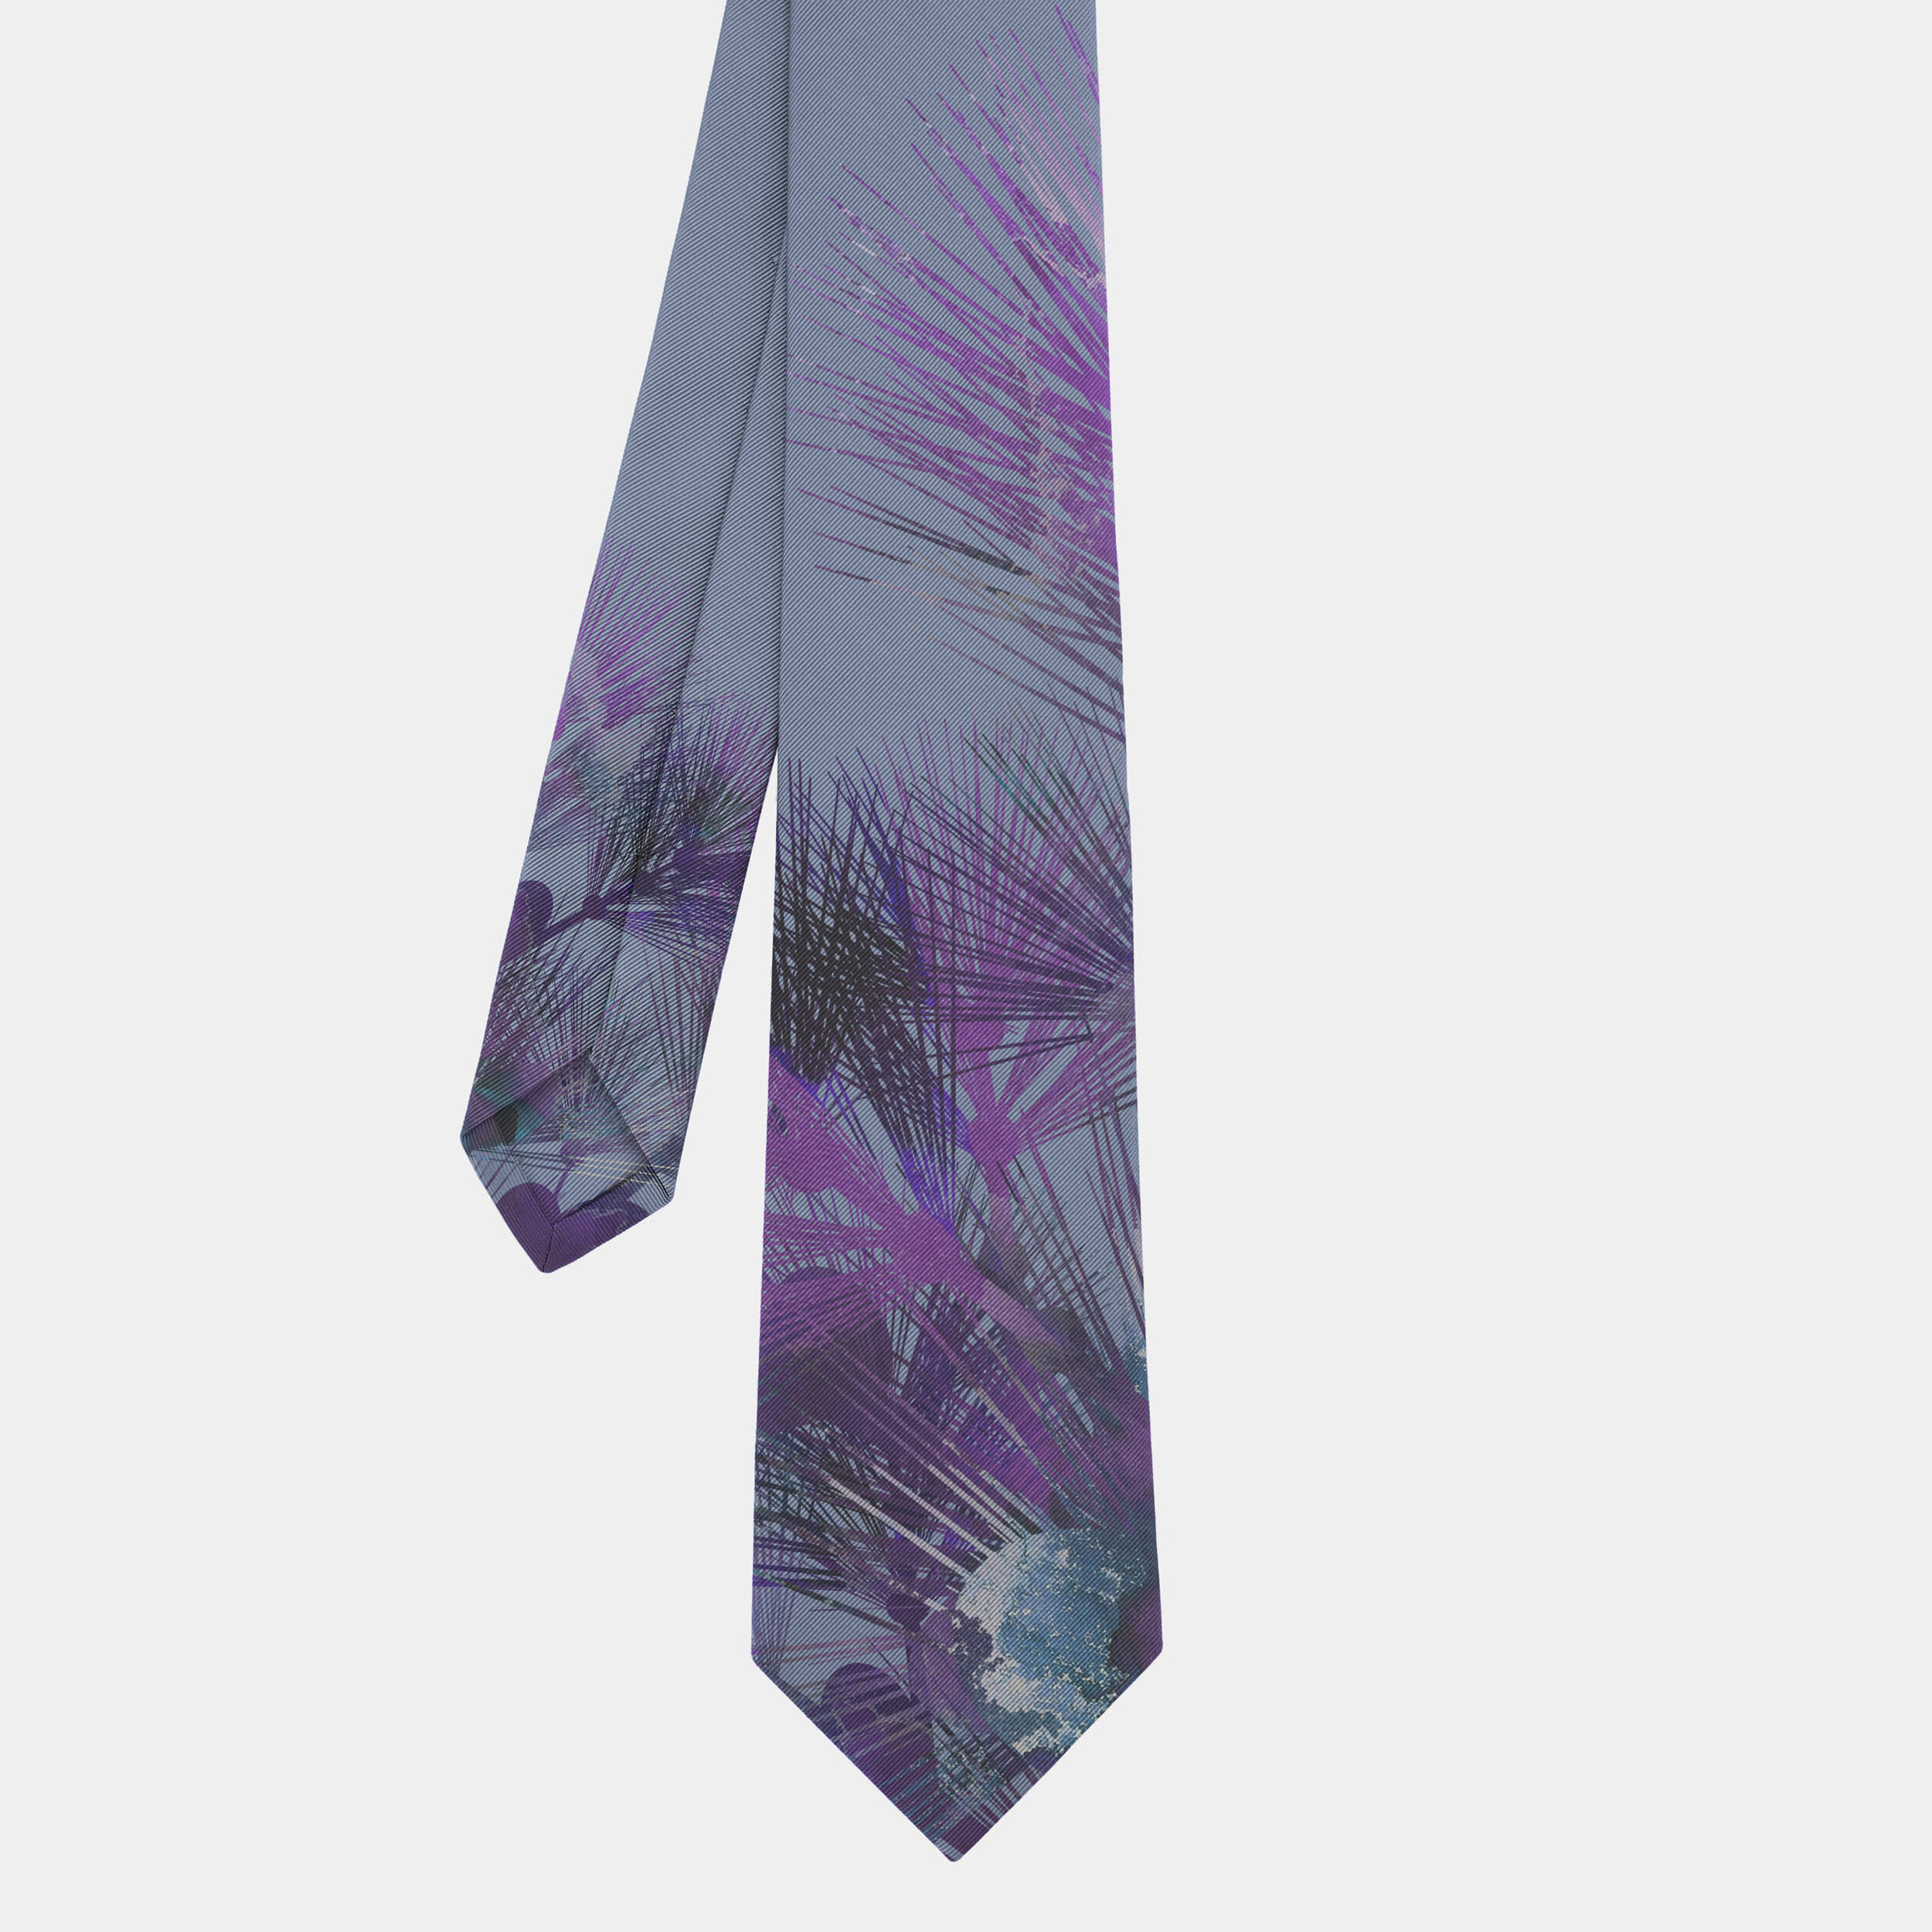 Misty Pine Tie.jpg